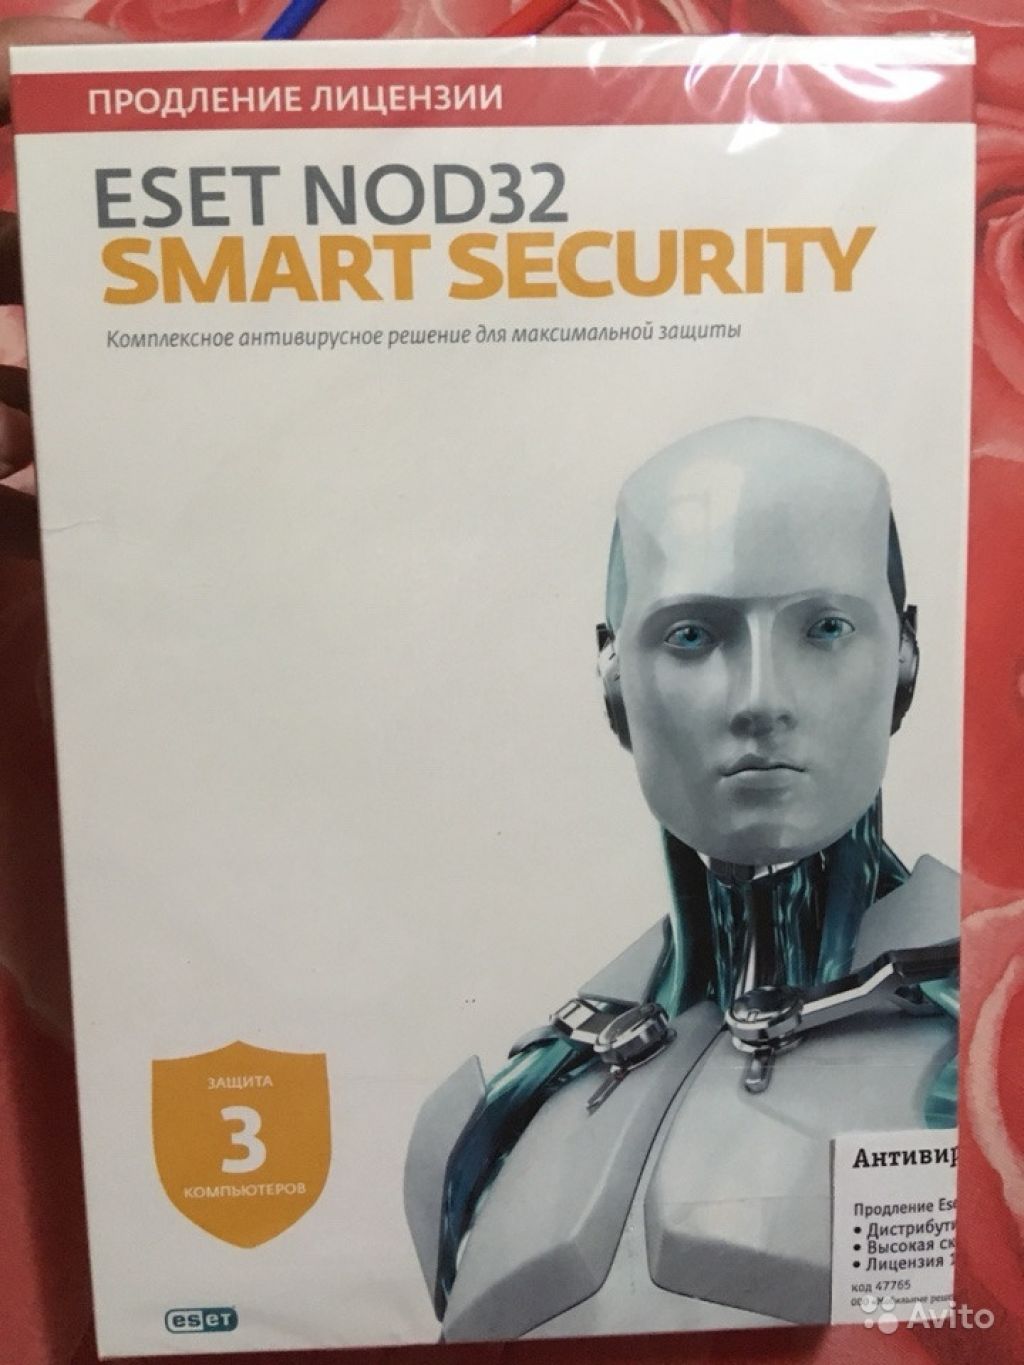 Антивирус на 3 компьют Eset nod 32 smart security в Москве. Фото 1